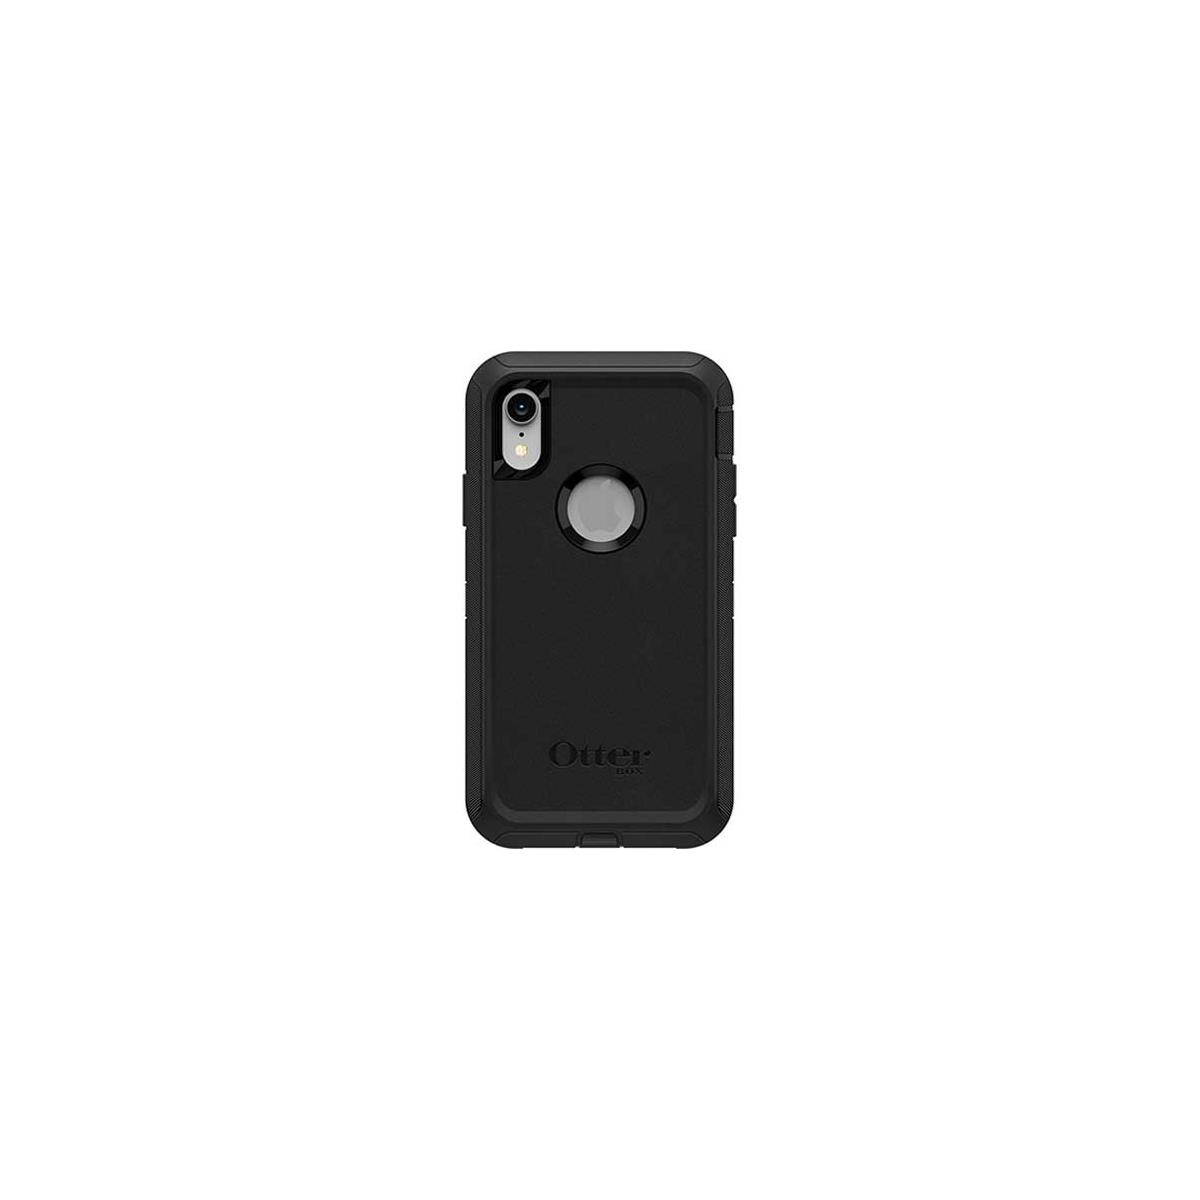 Image of OtterBox Defender Case for iPhone XR - Black